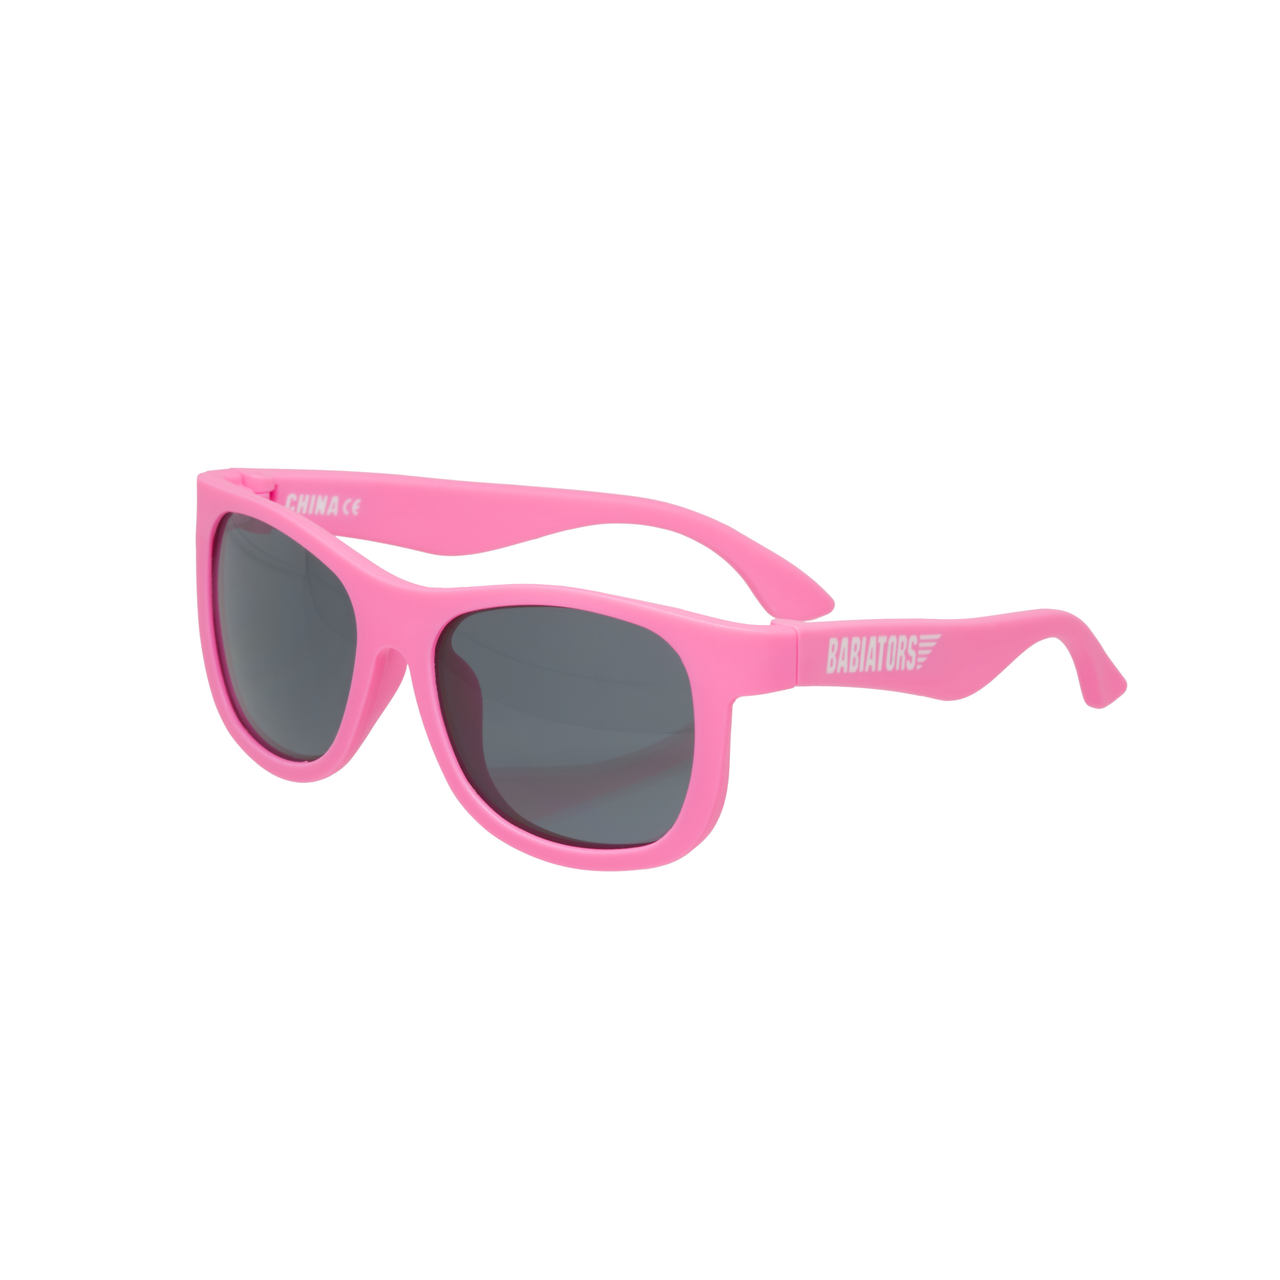 Think Pink Navigator Babiators Sunglasses